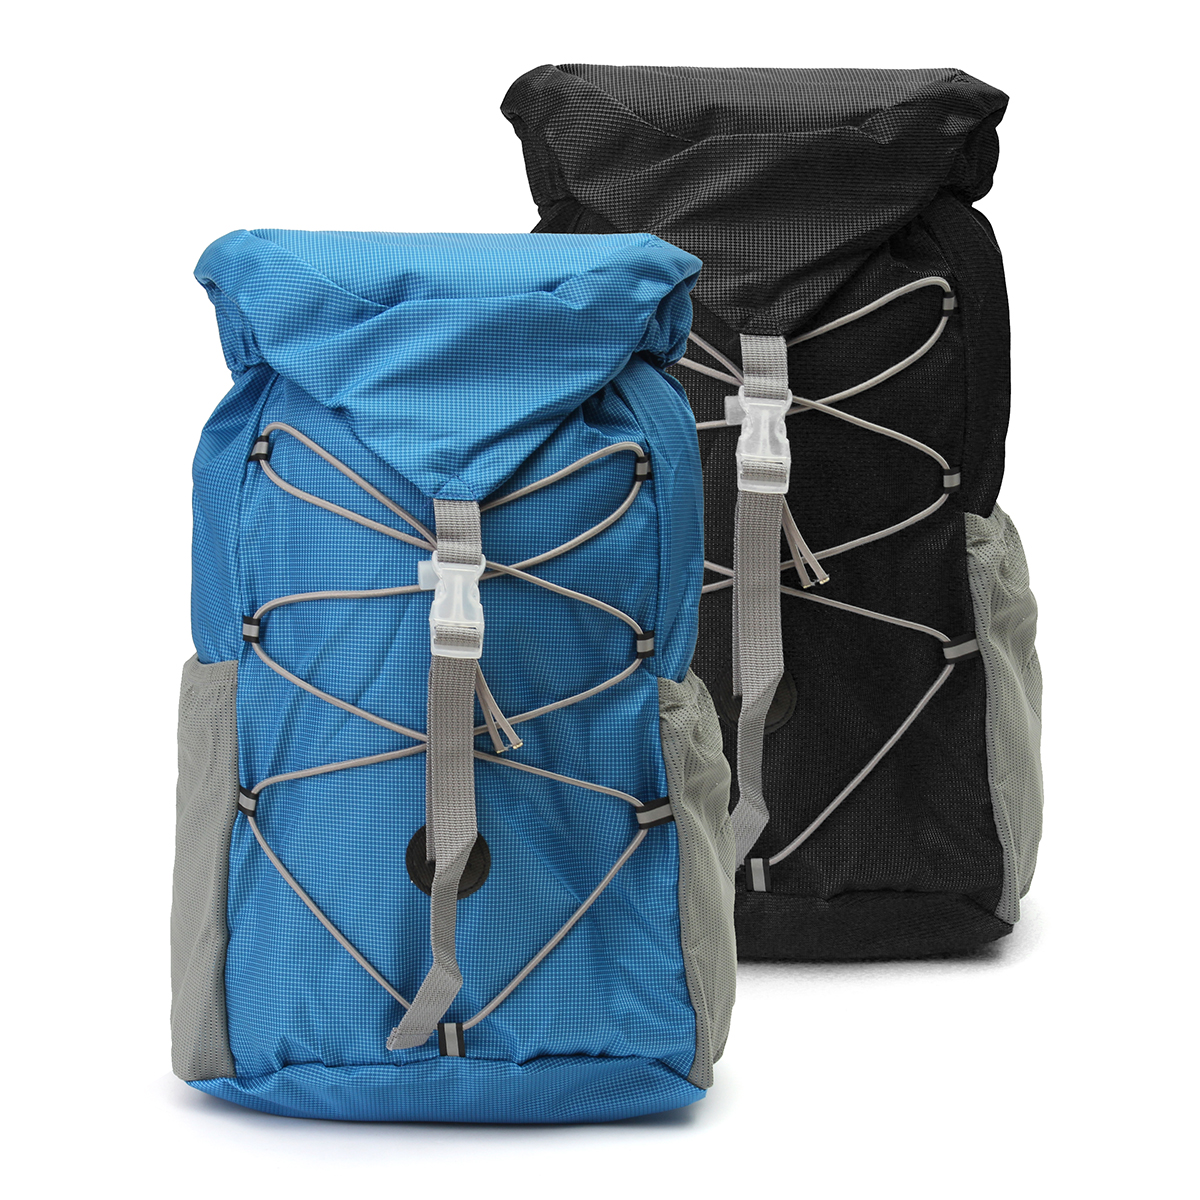 33L-Outdoor-Sport-Backpack-Unisex-Waterproof-Camping-Hiking-Travel-Shoulder-Bag-1114325-2